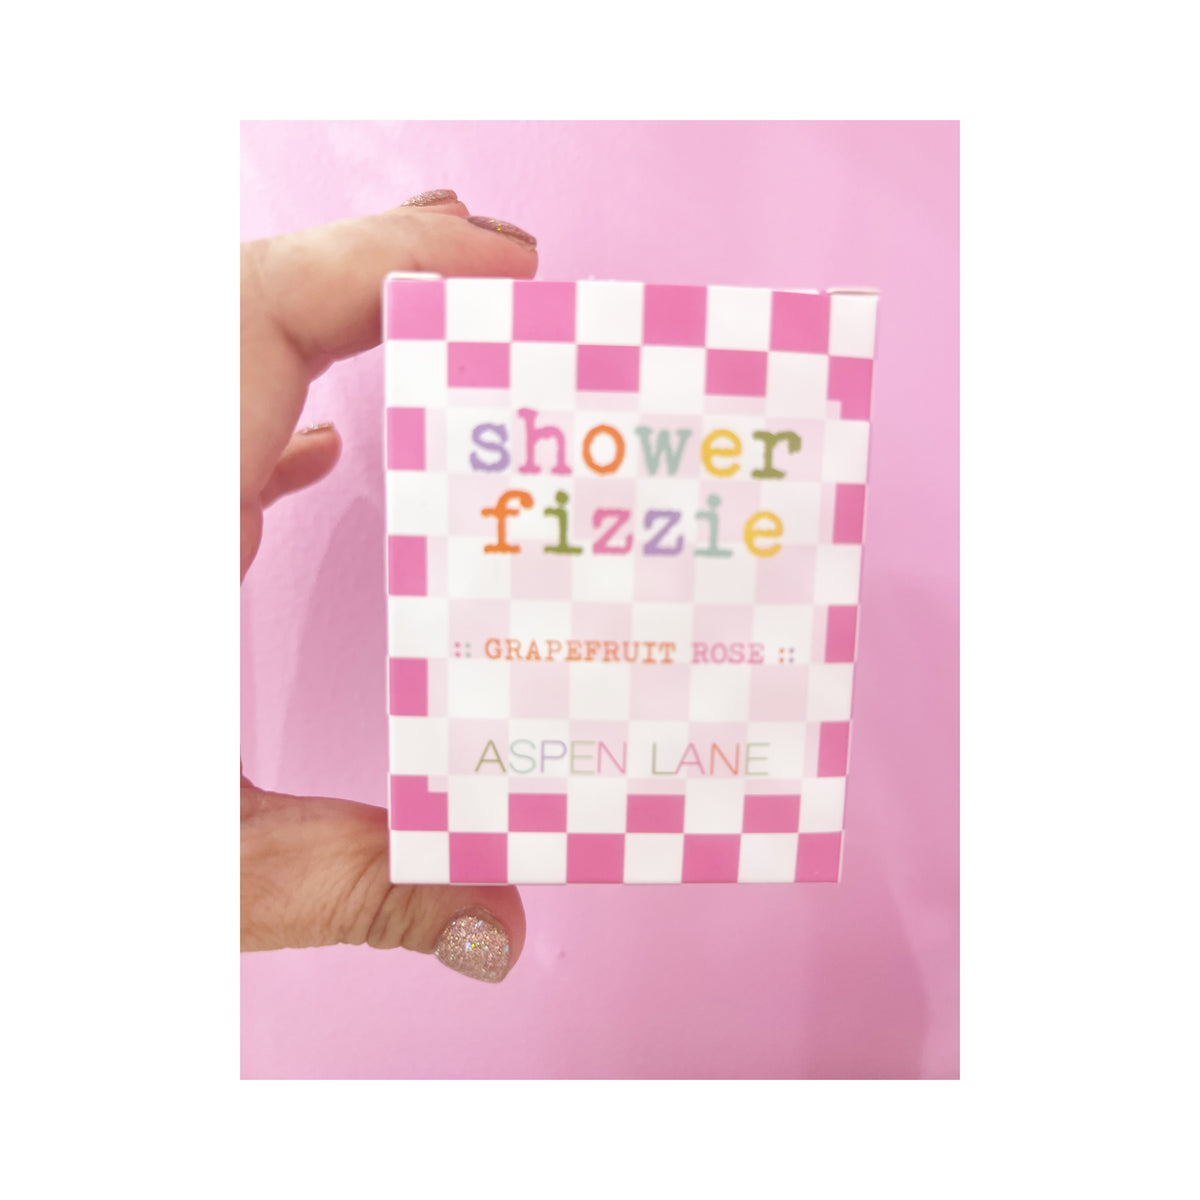 Shower Fizzie | Grapefruit Rose - Aspen Lane 